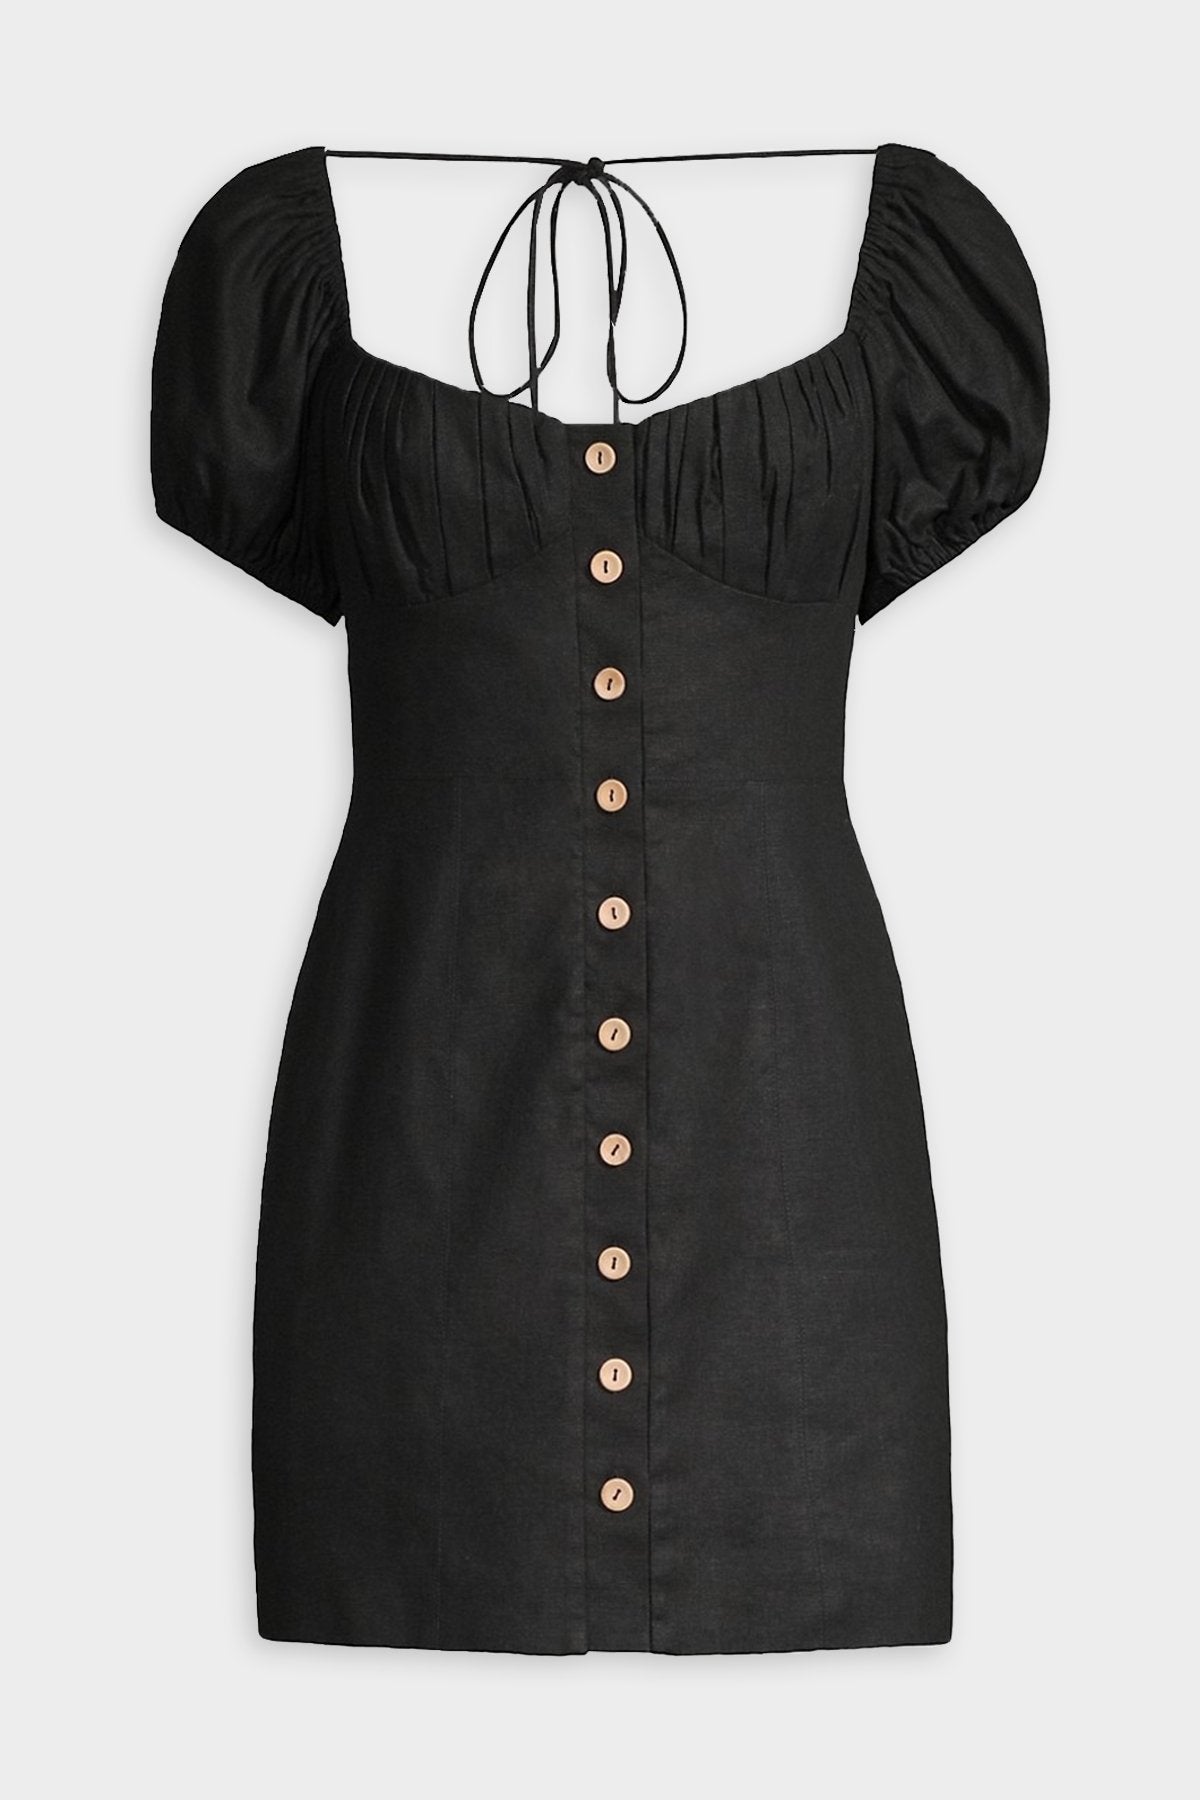 Sadie Dress in Black - shop-olivia.com